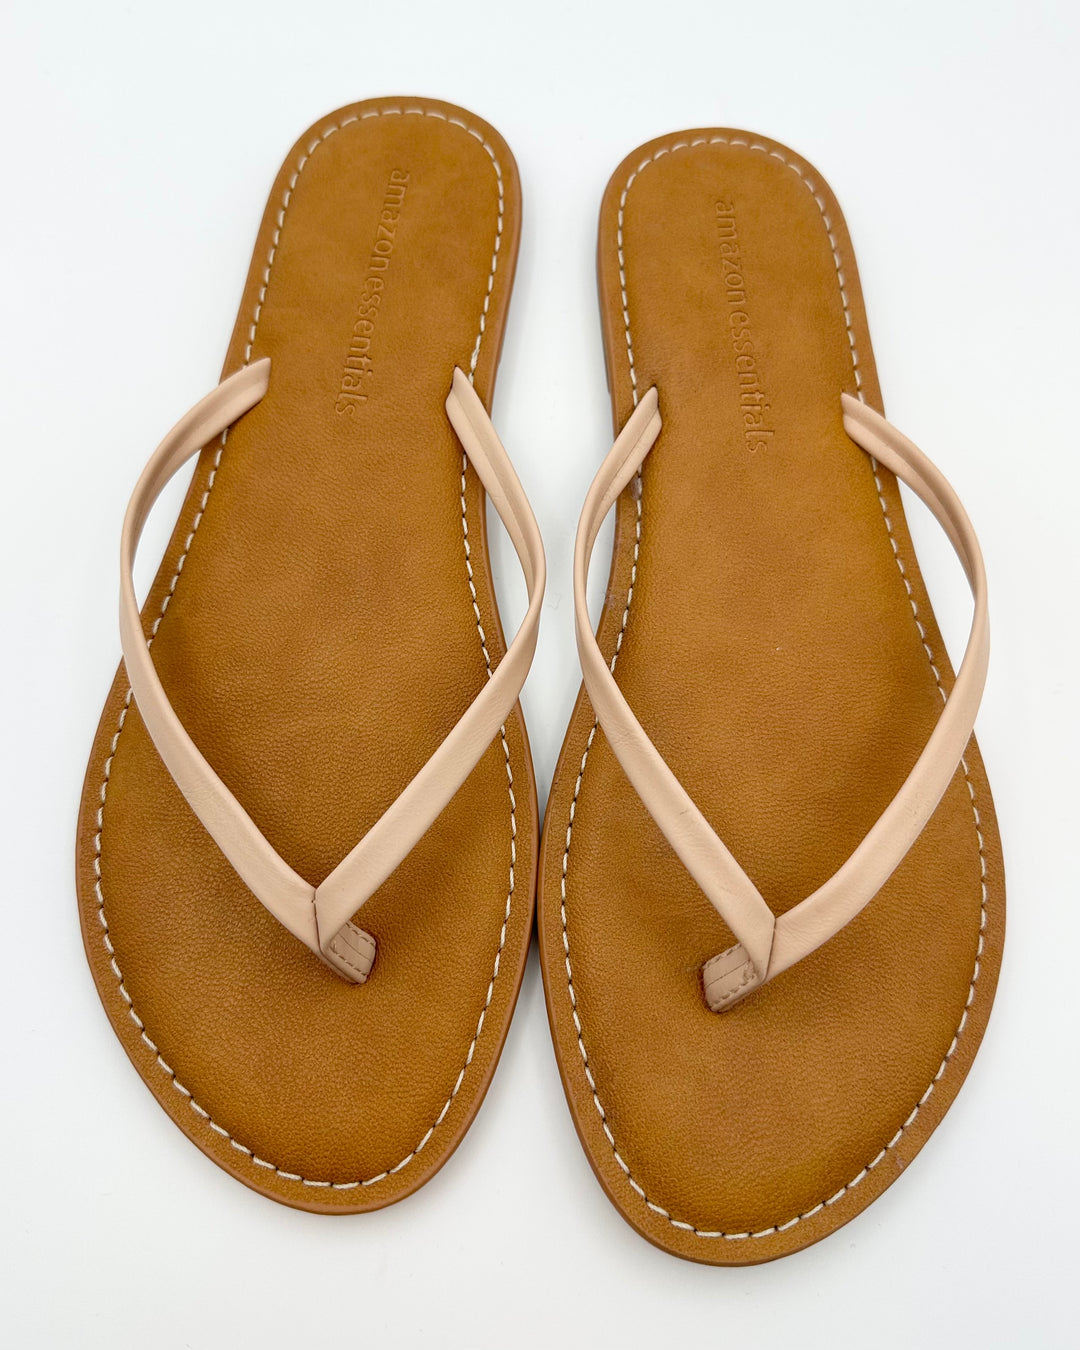 Tan Flip Flops - Size 7